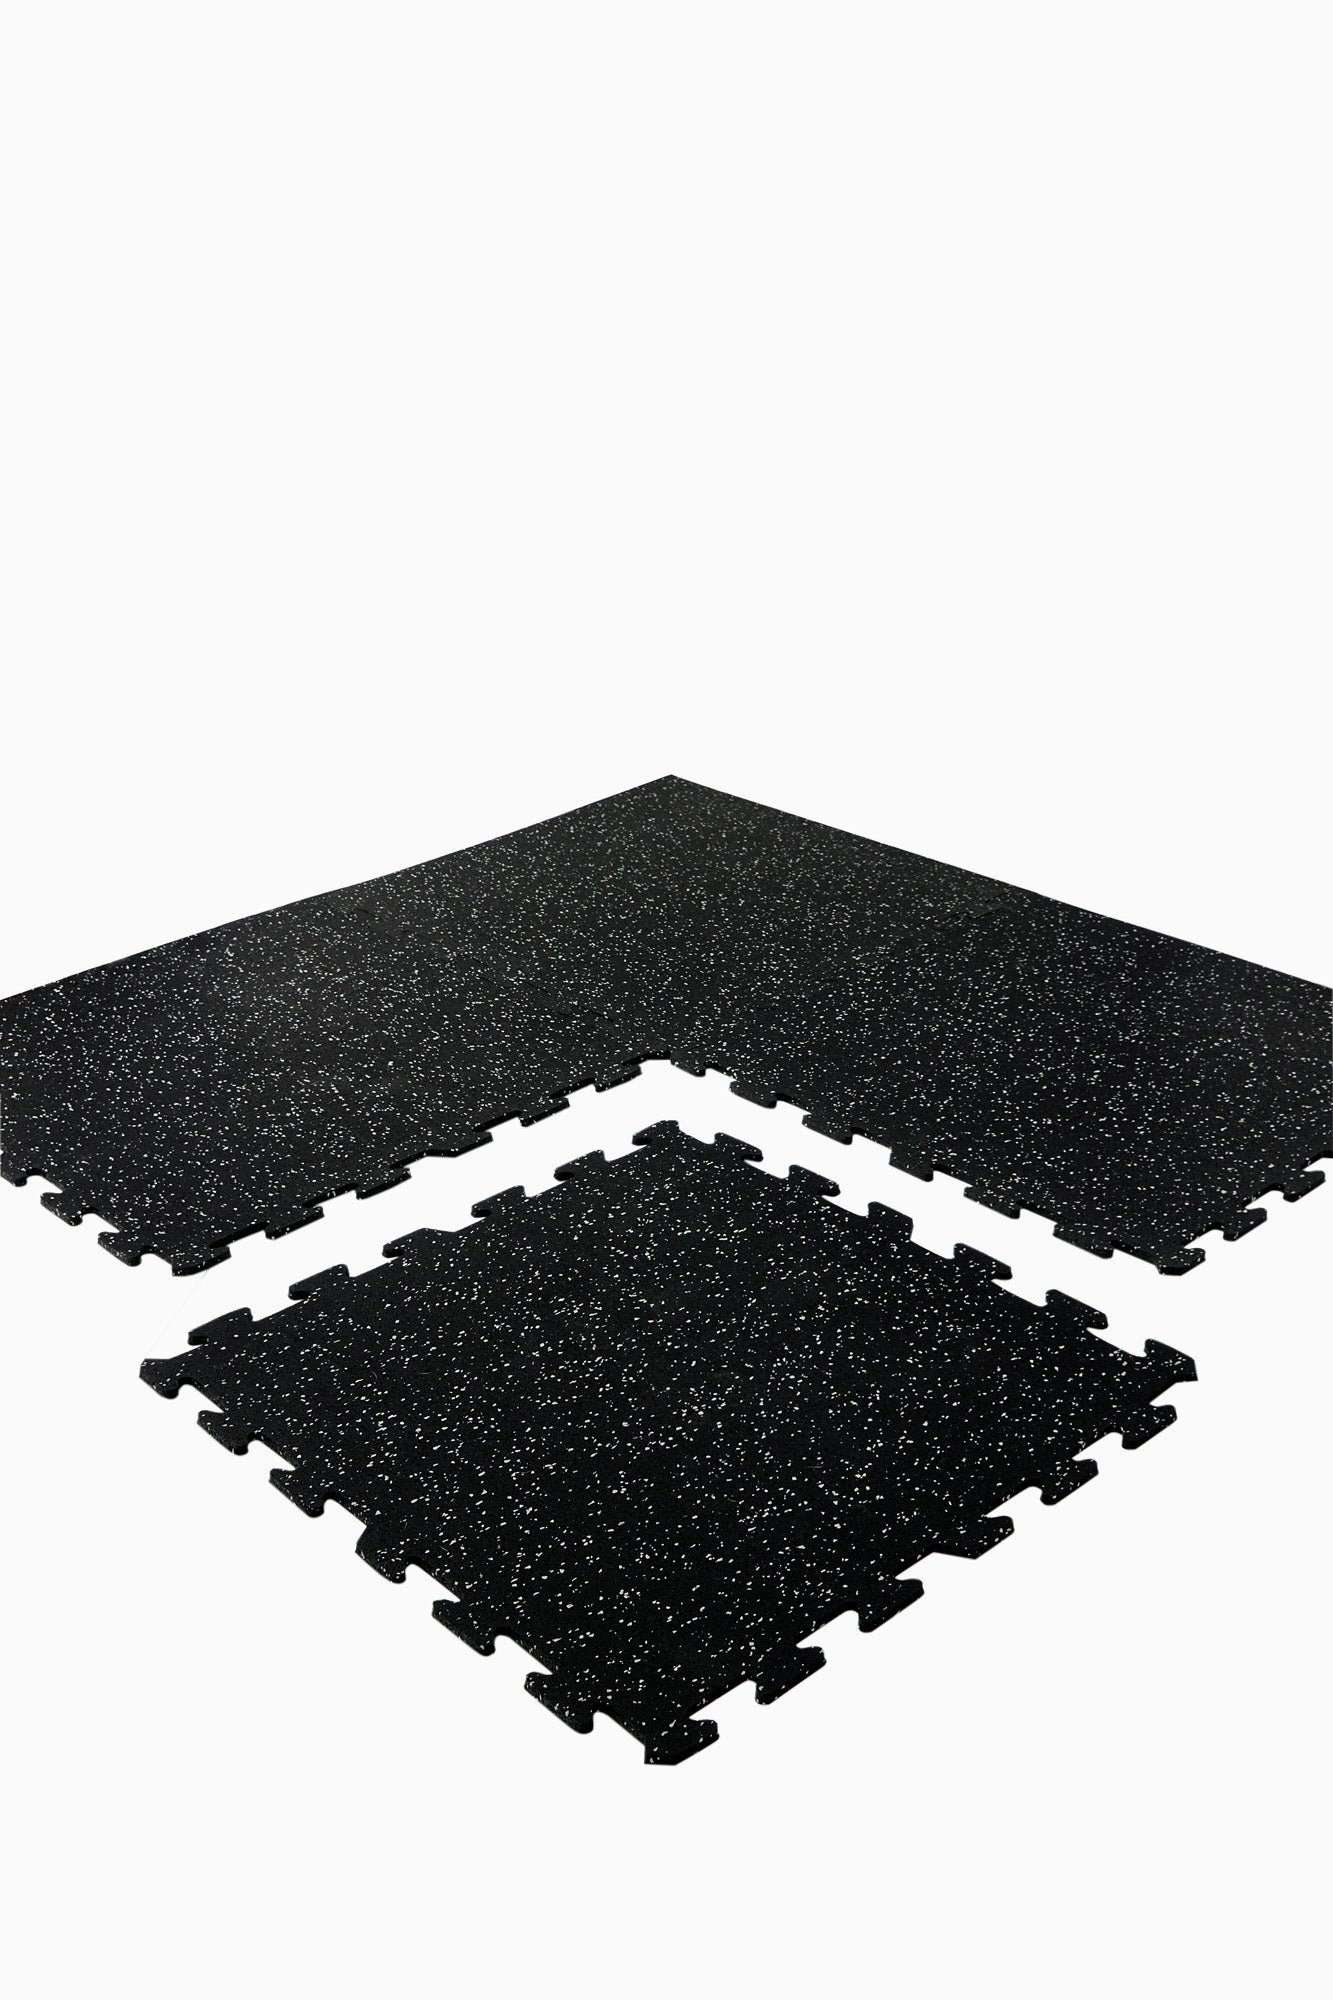 3/8” Color Fleck Rubber Flooring Rolls - Eco-Friendly & Durable